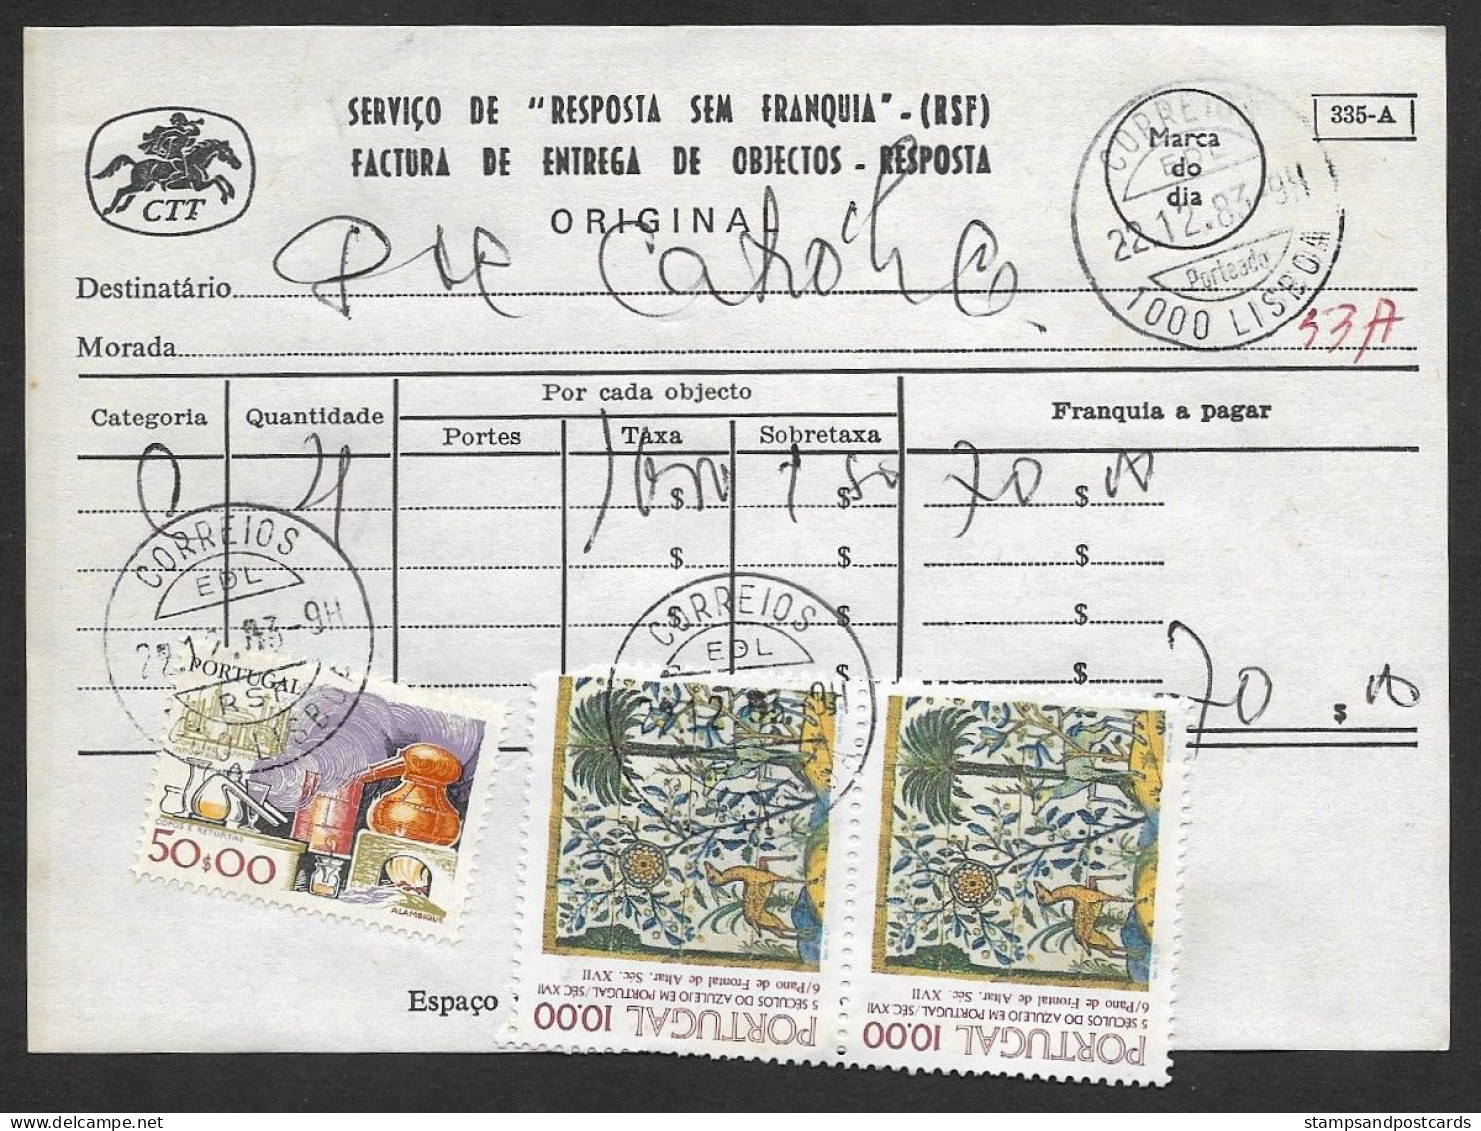 Portugal Document Timbré Avec Cachet A Date RSF Réponse Payée 1983 Date Stamp Business Reply Service - Postmark Collection